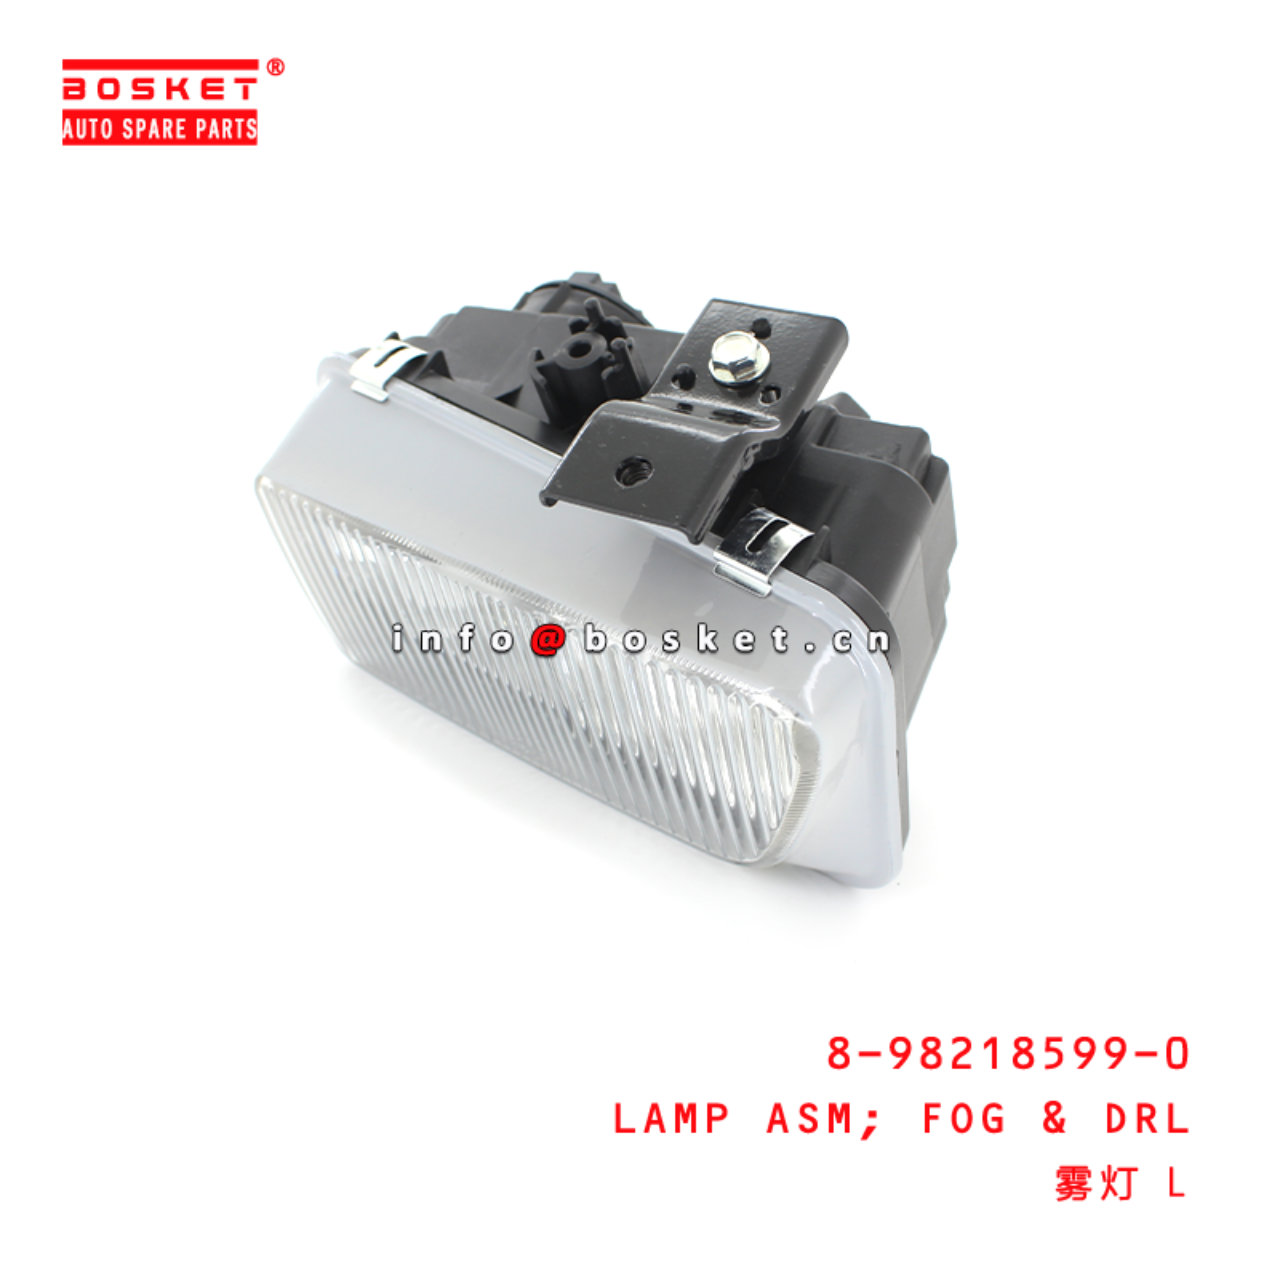 8-98218599-0 Fog & Drl Lamp Assembly Suitable for ISUZU FRR 8982185990